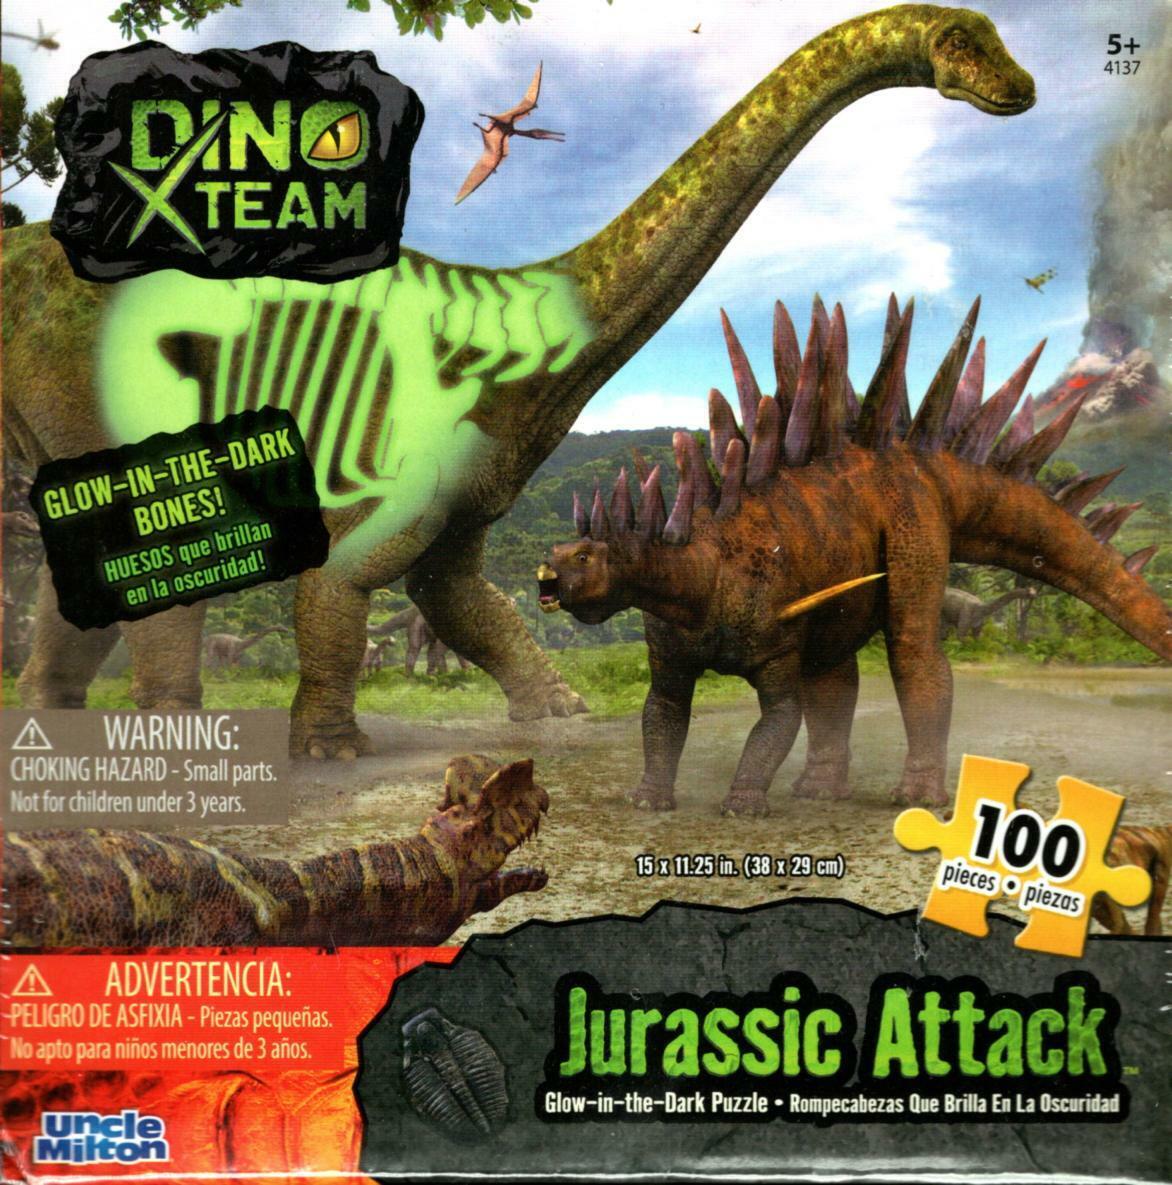 Dino X Team Jurassic Attack - Glow in the Dark Puzzle - 100 Piece Jigsaw Puzzle